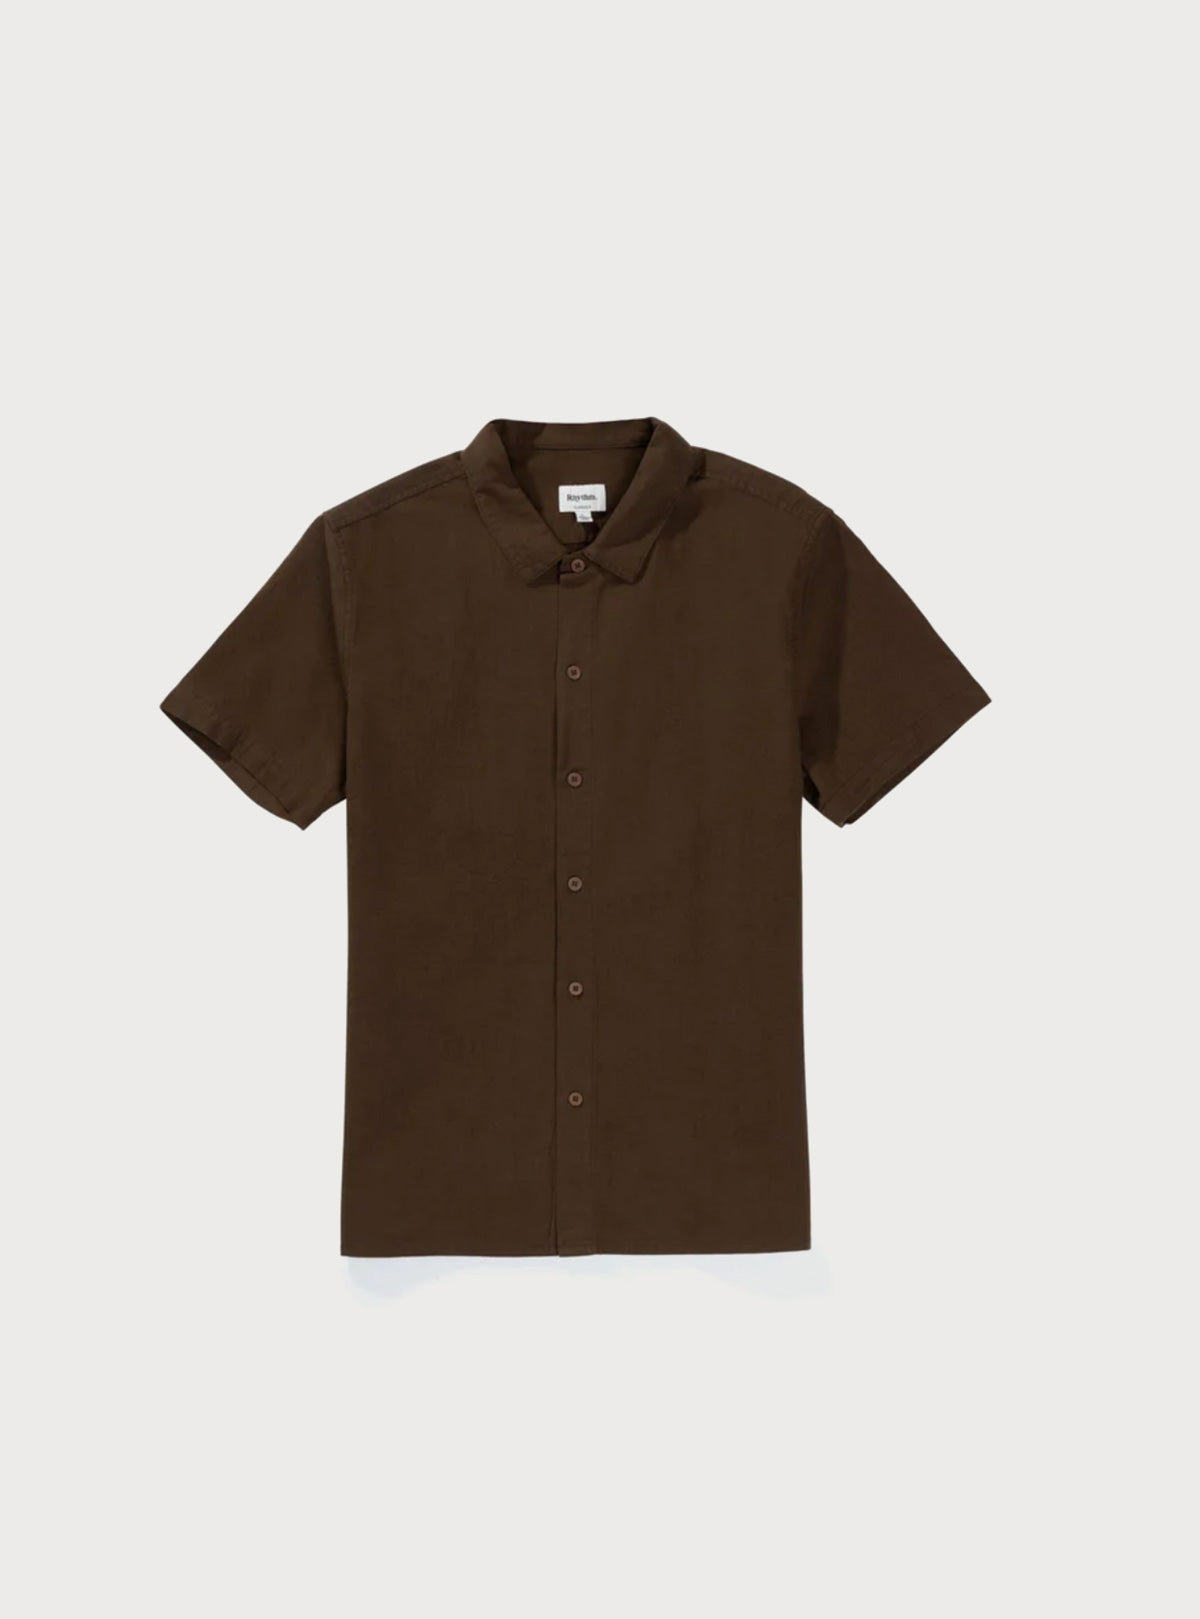 Rhythm - Classic Shirt - Brown